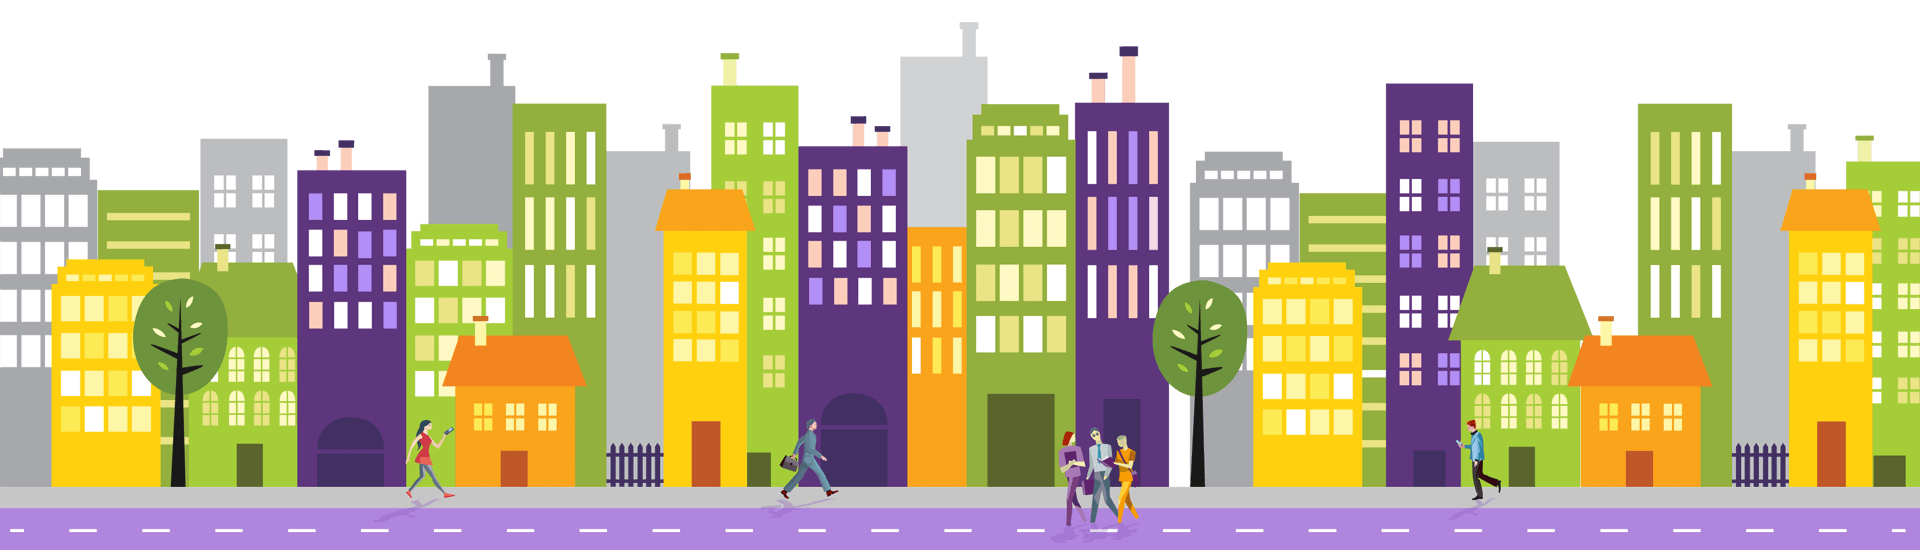 Illustrated purple cityscape